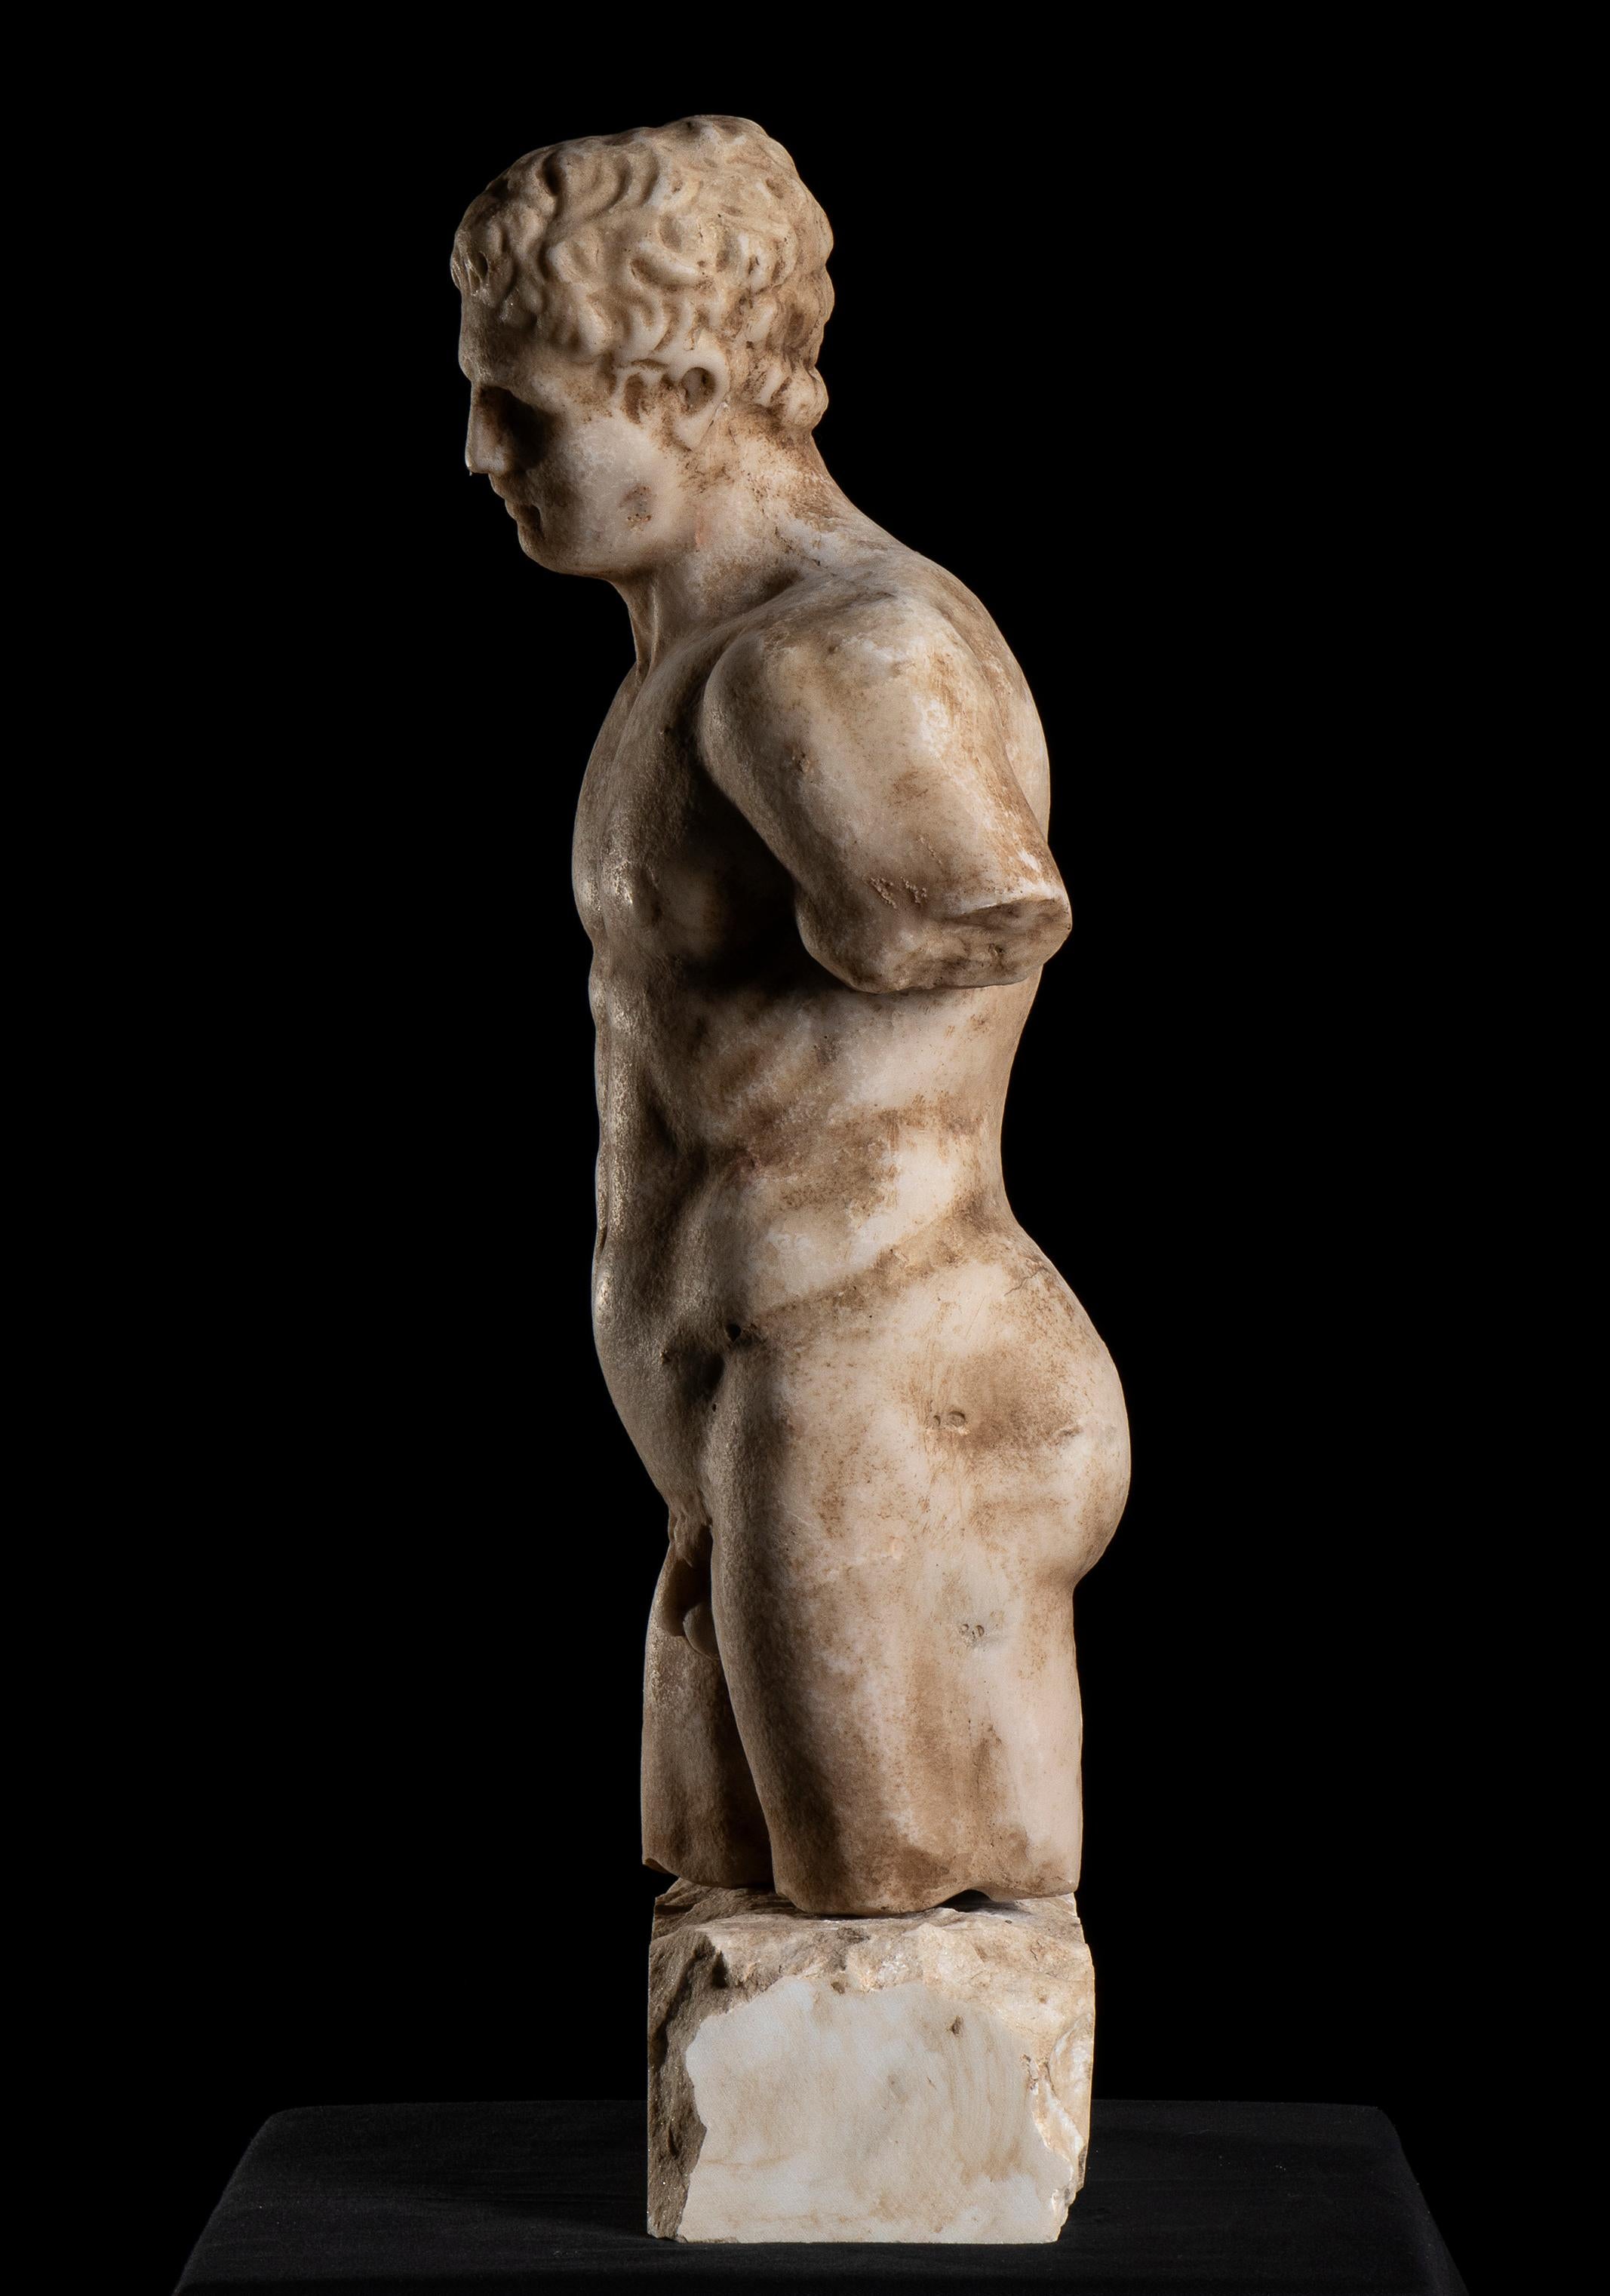 Torso Sculpture of Doryphoros as a Torso After the Greek Original by Polykleitos 1